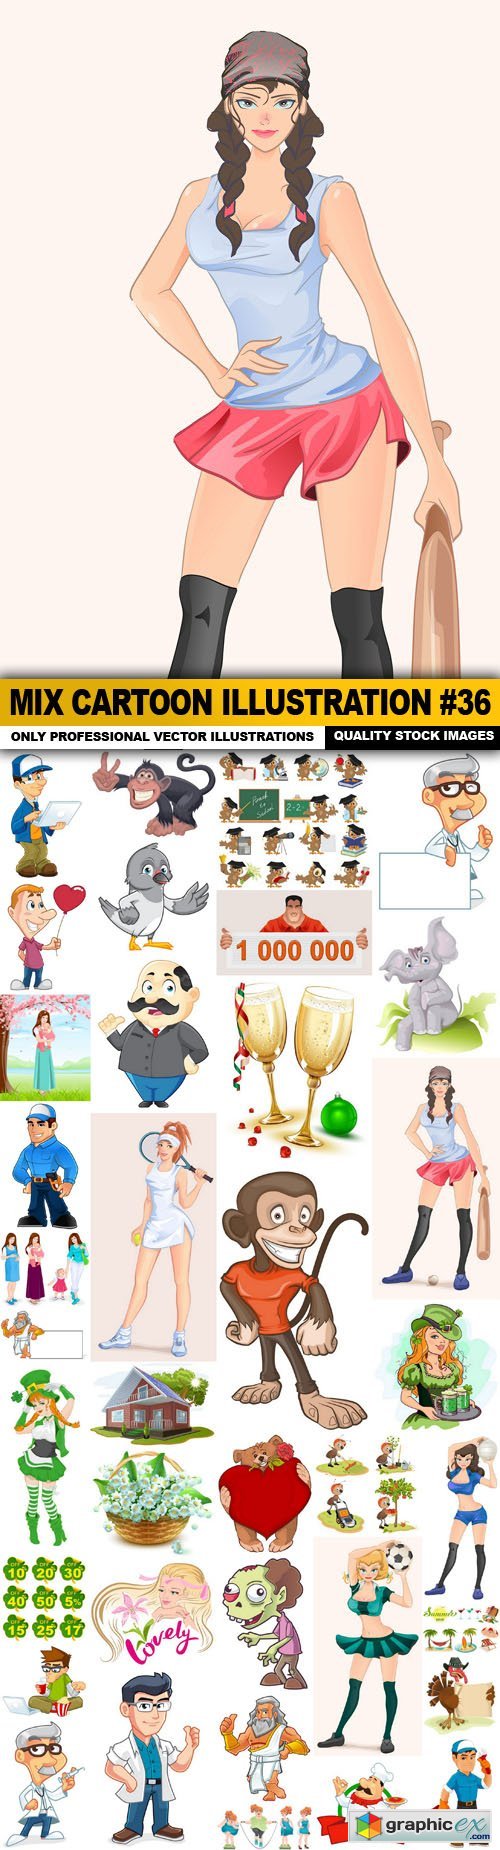 Mix cartoon Illustration #36